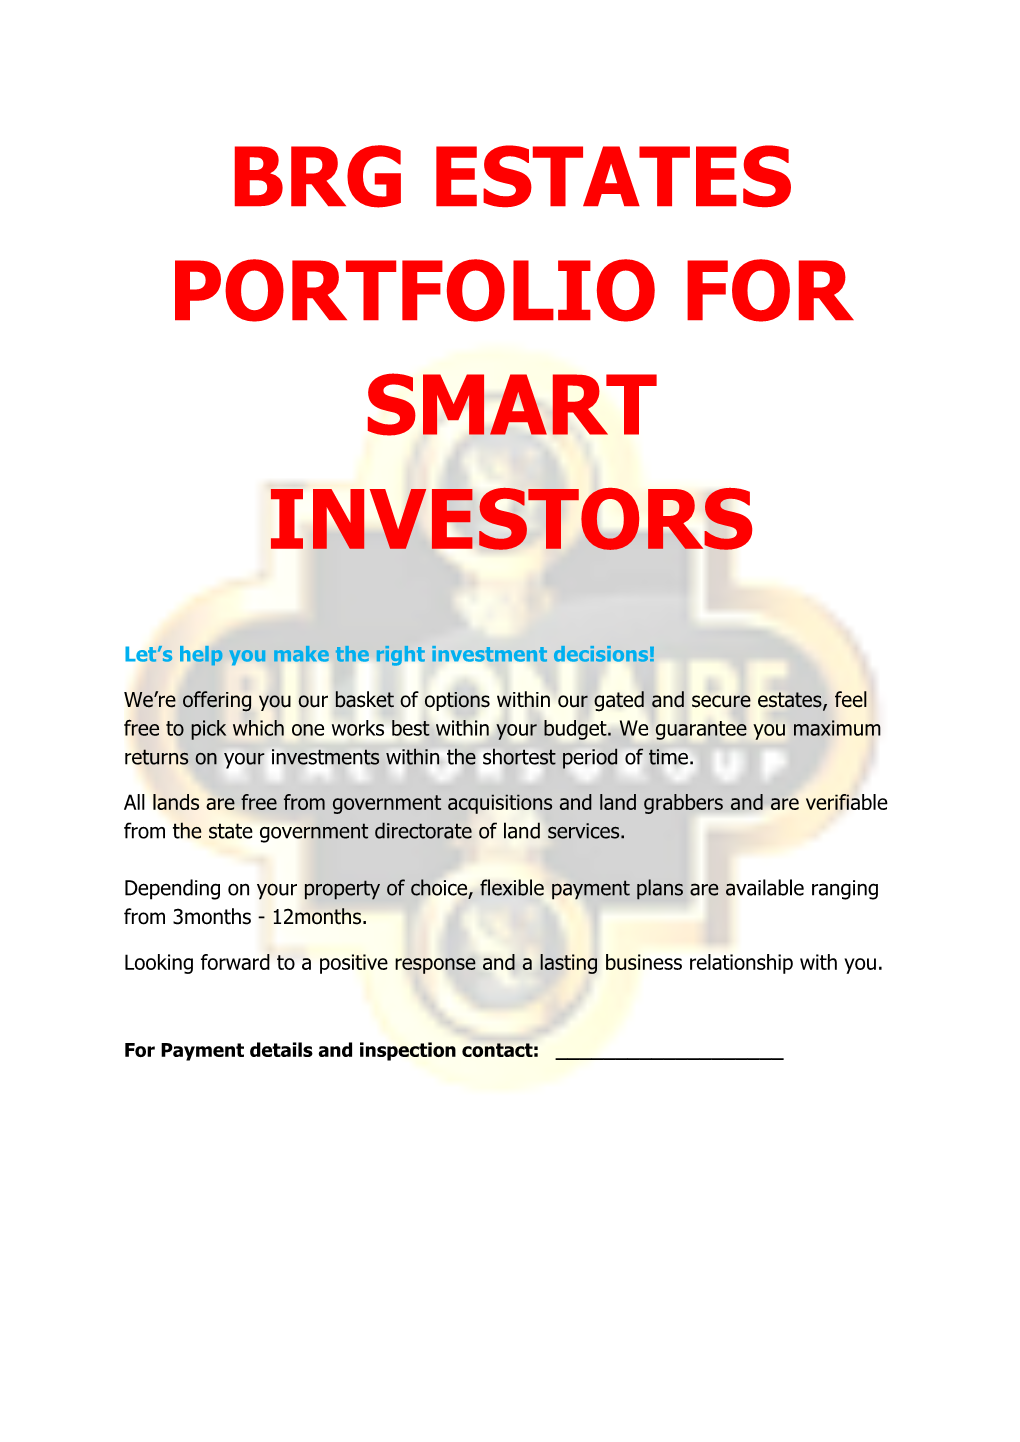 Brg Estates Portfolio for Smart Investors